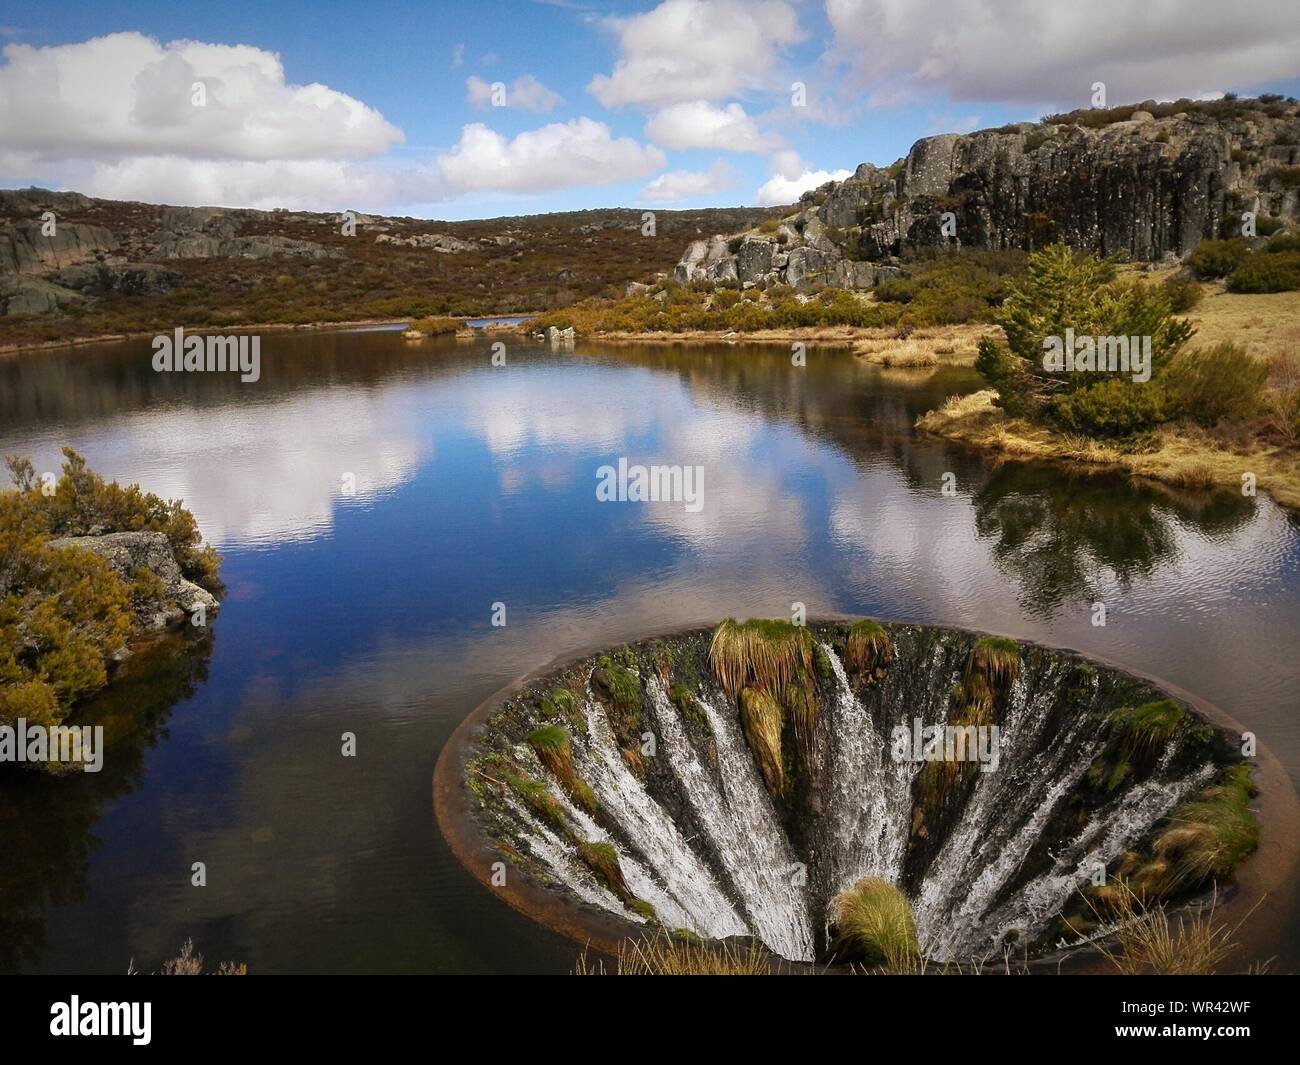 Sinkhole On Lake By Serra Da Estrela Mountain Range Stock Photo ...